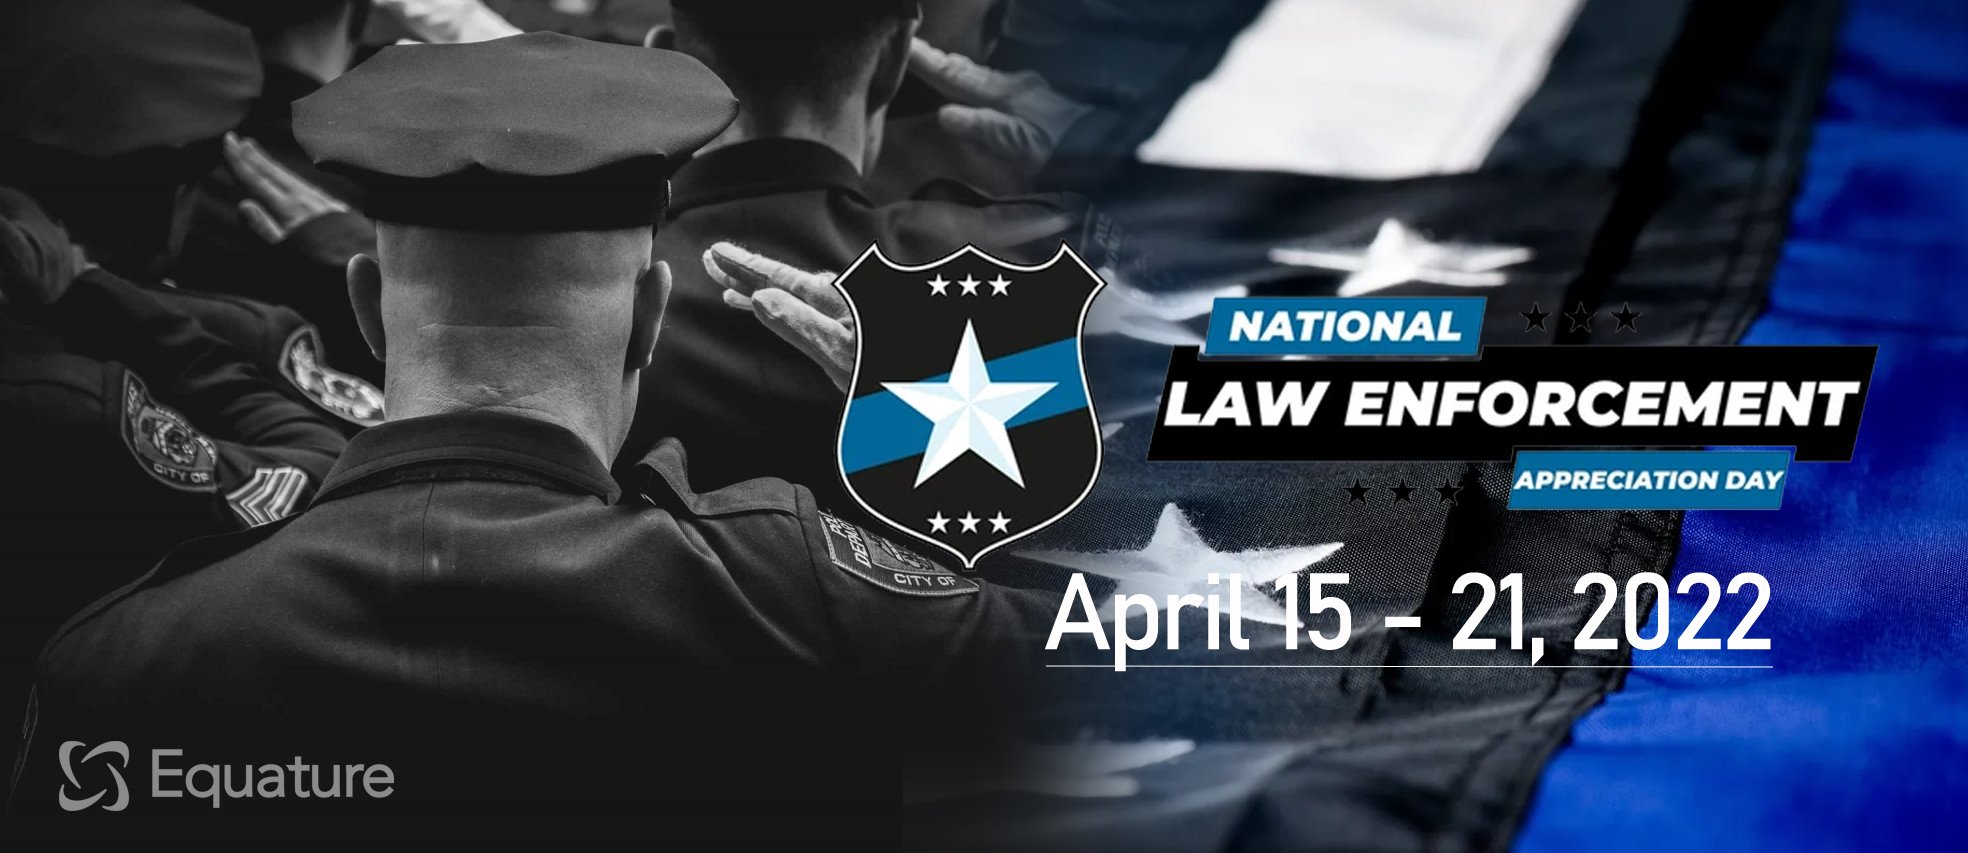 National Law Enforcement Week April 15-21, 2022